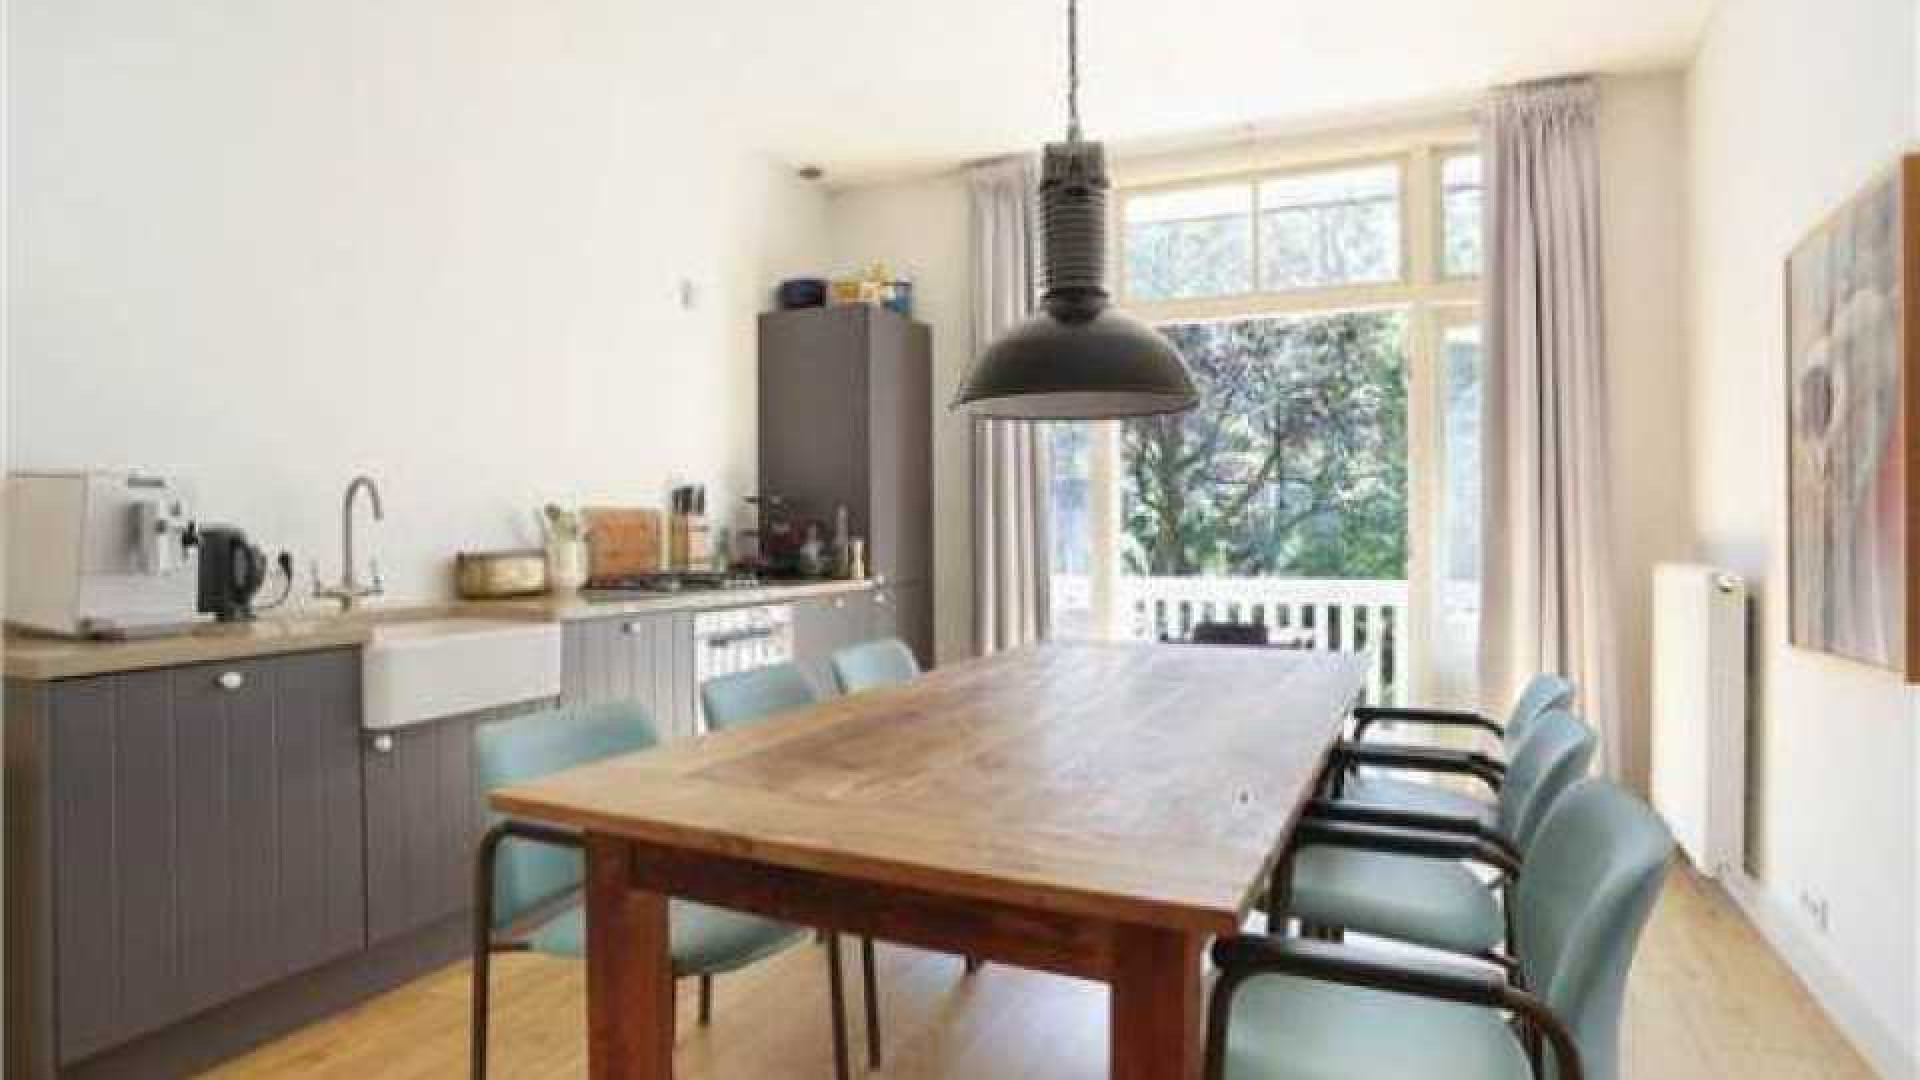 Dionne Stax koopt leuk appartement in Amsterdam. Zie foto's plus video! 11